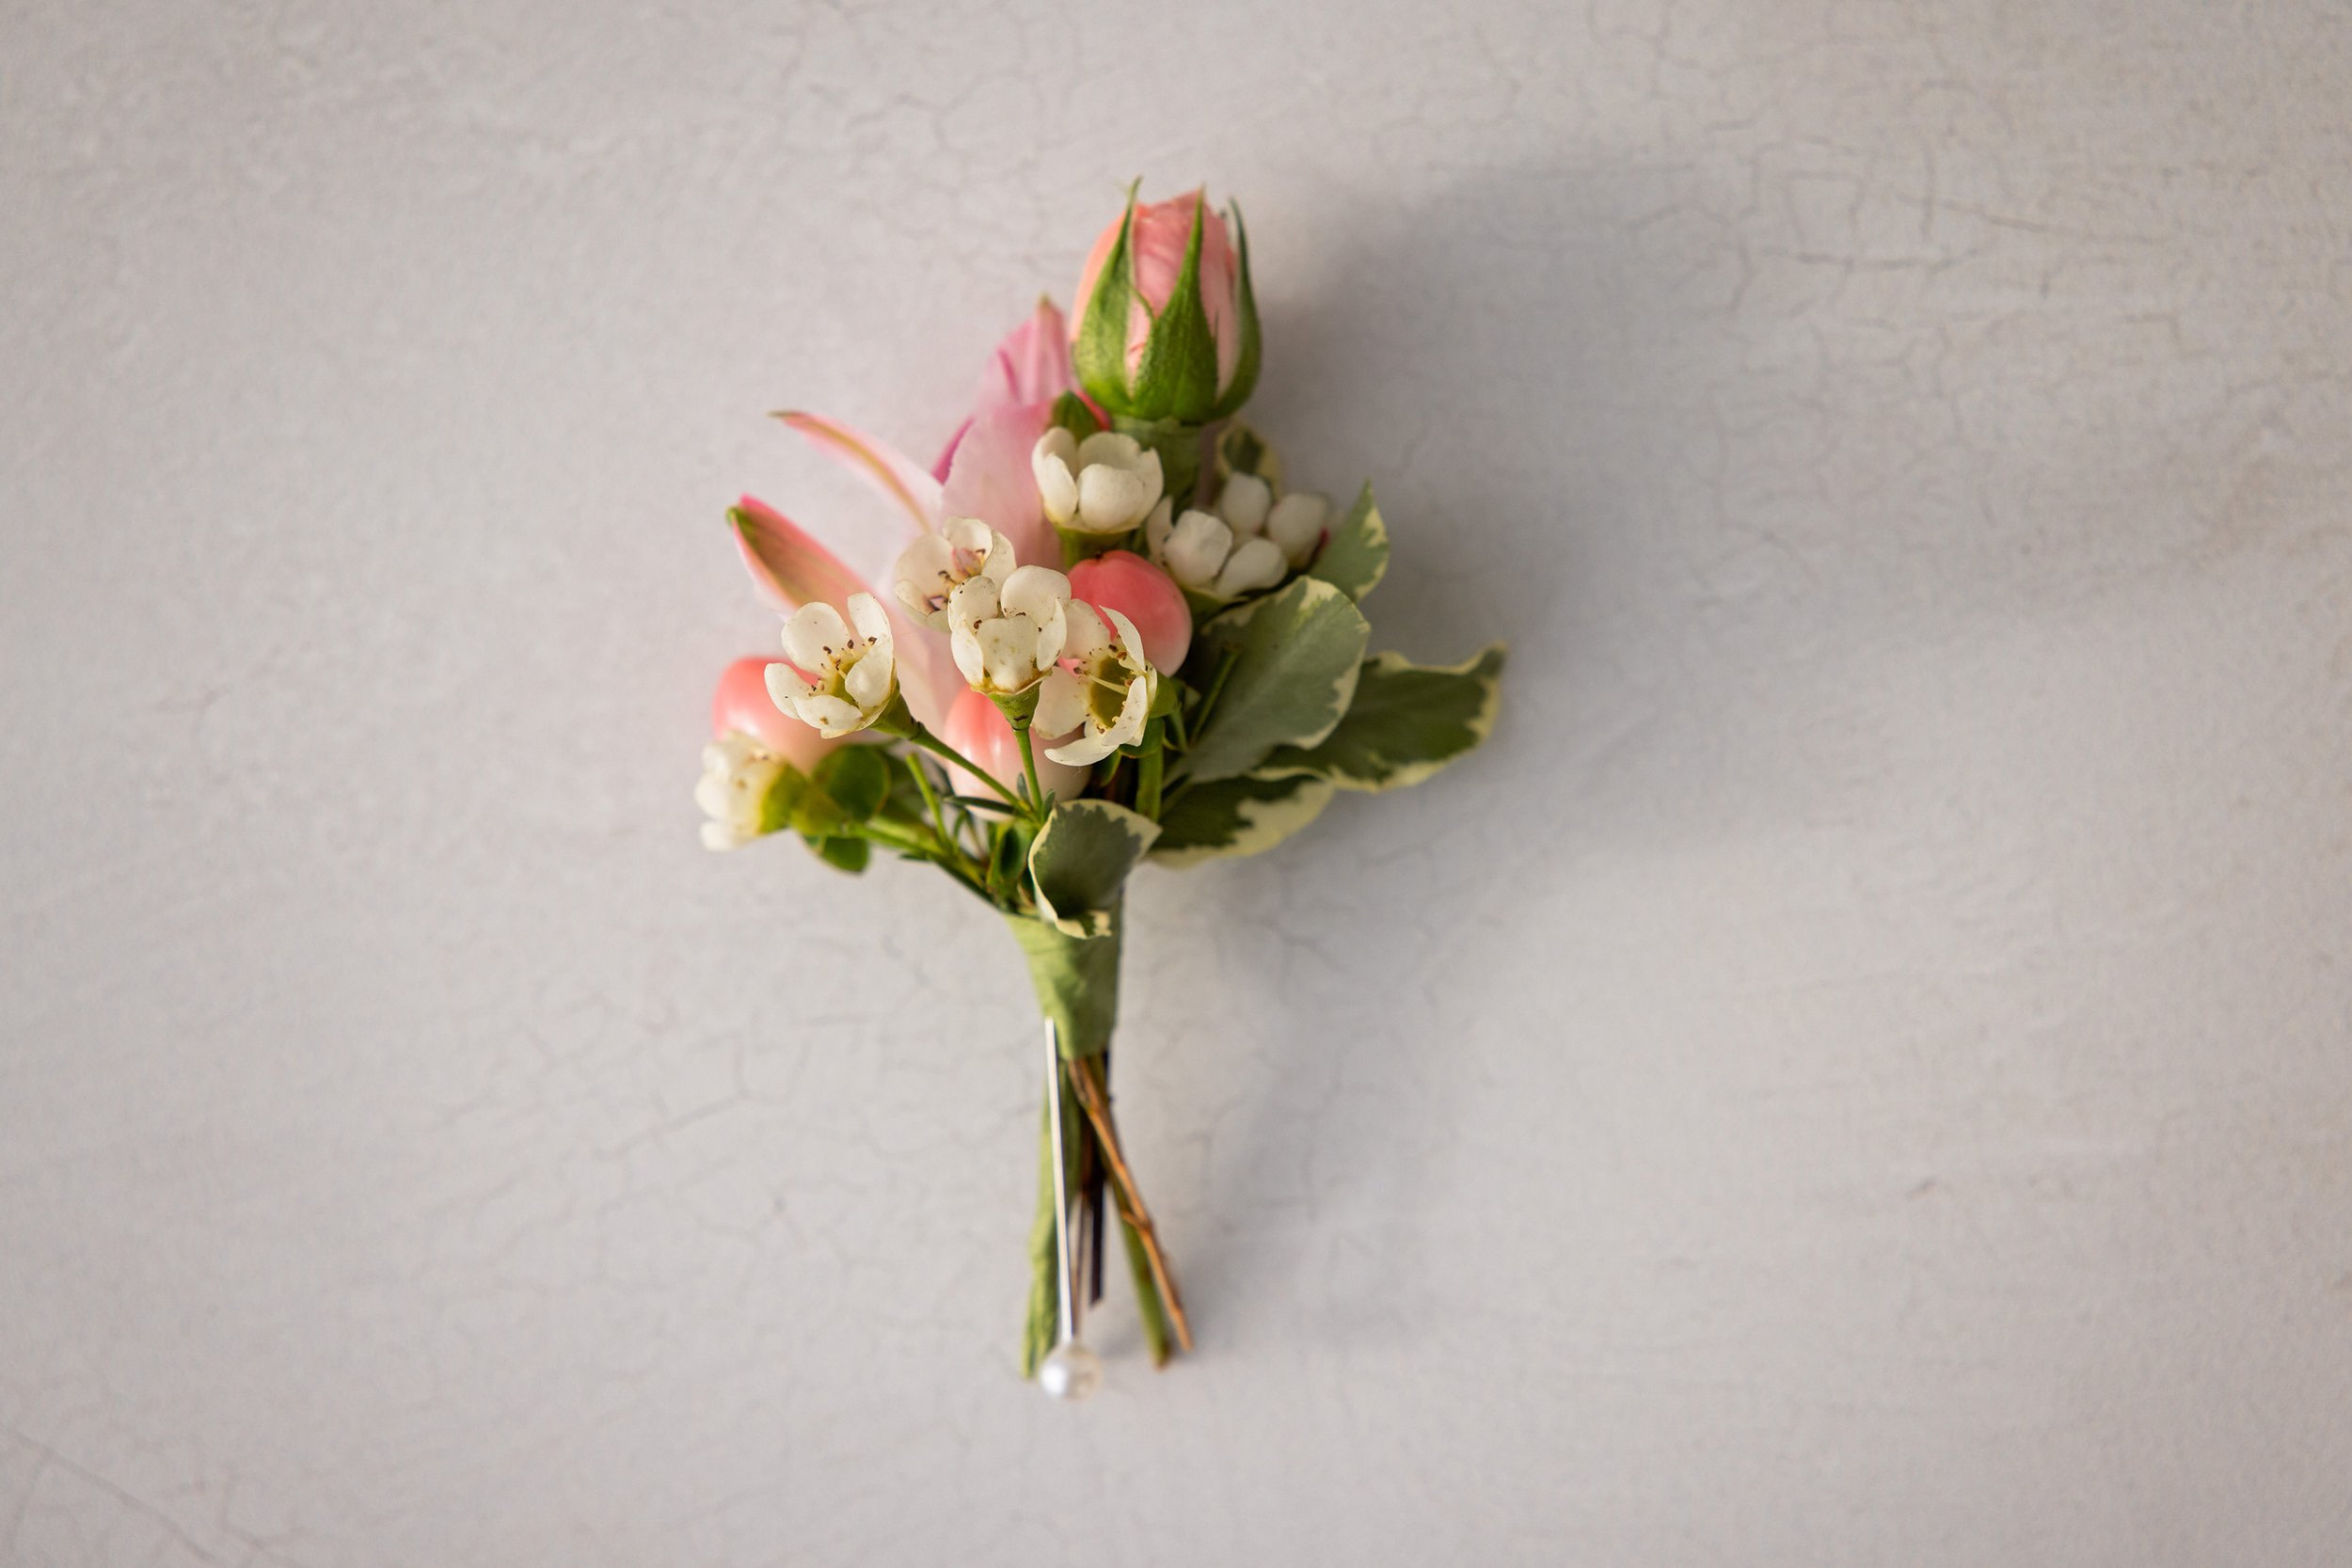 Gatlinburg-elopement-bouquet-2.jpg